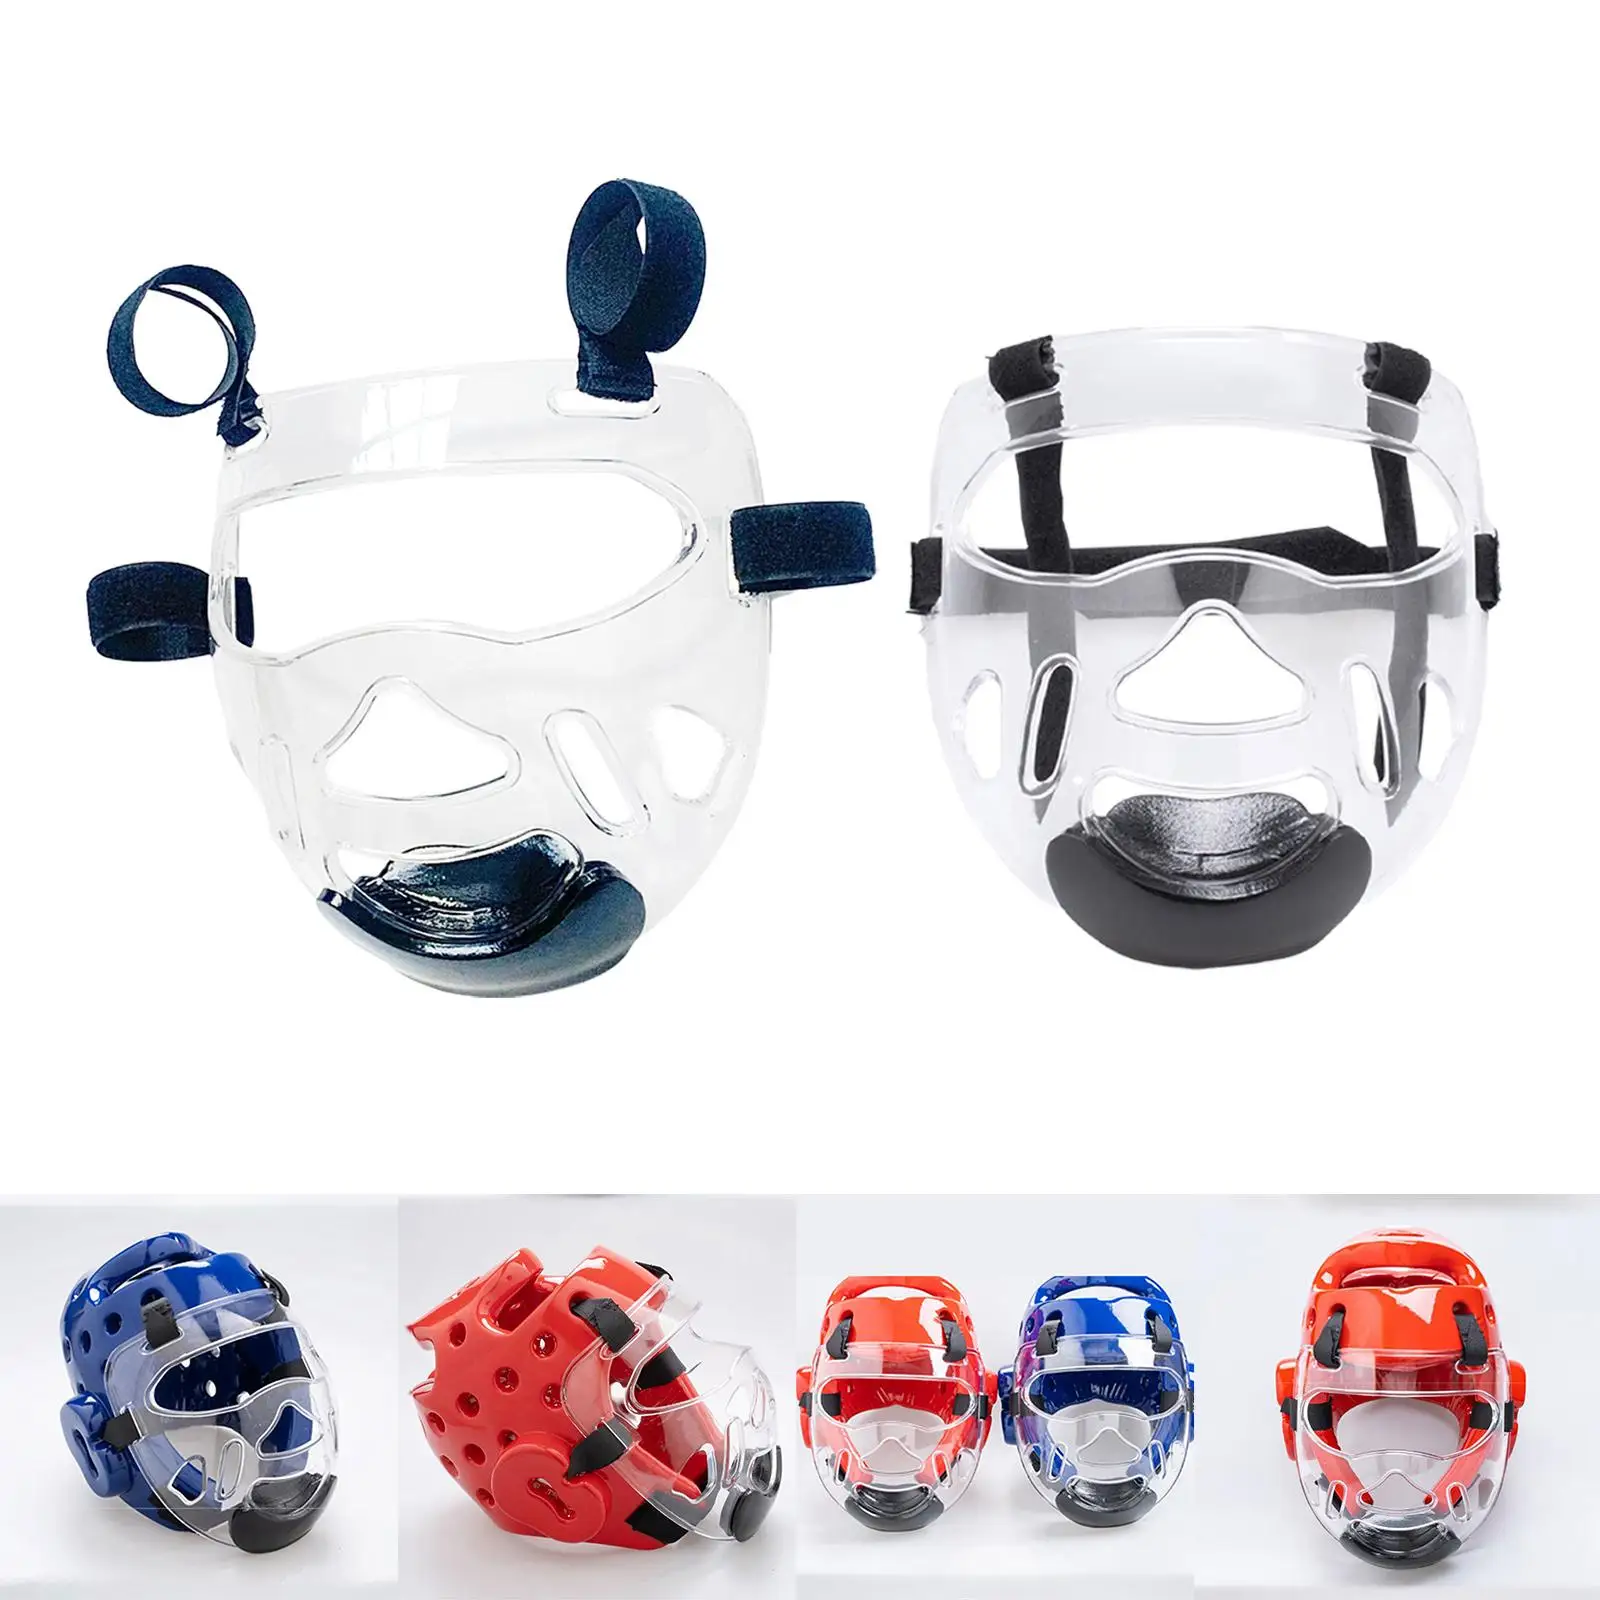 Taekwondo Mask Detachable Head Gear Face Shield Protective Face Protection Cover for Boxing